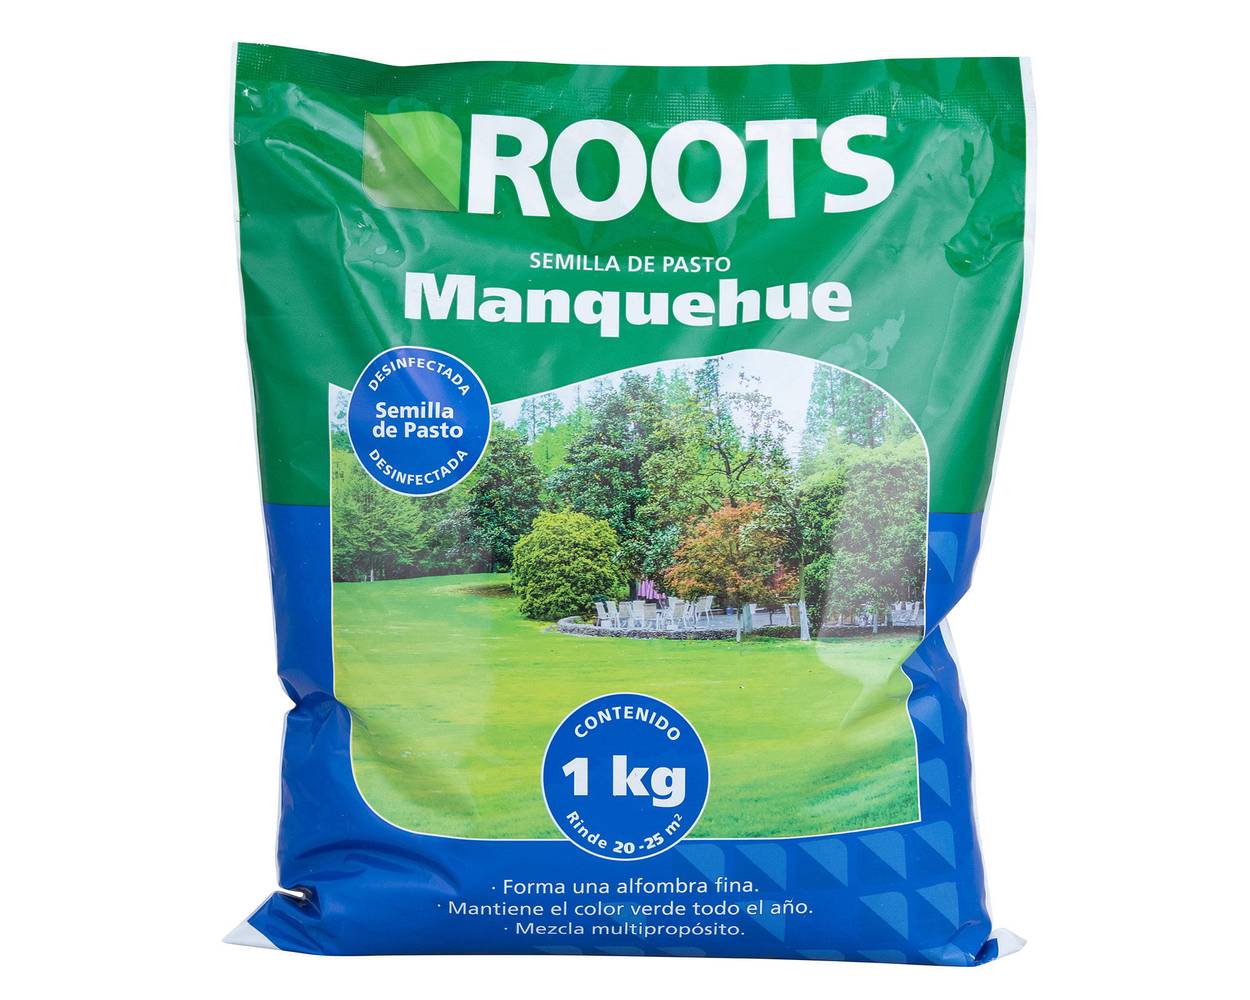 Roots semilla de pasto manquehue plus (1kg)